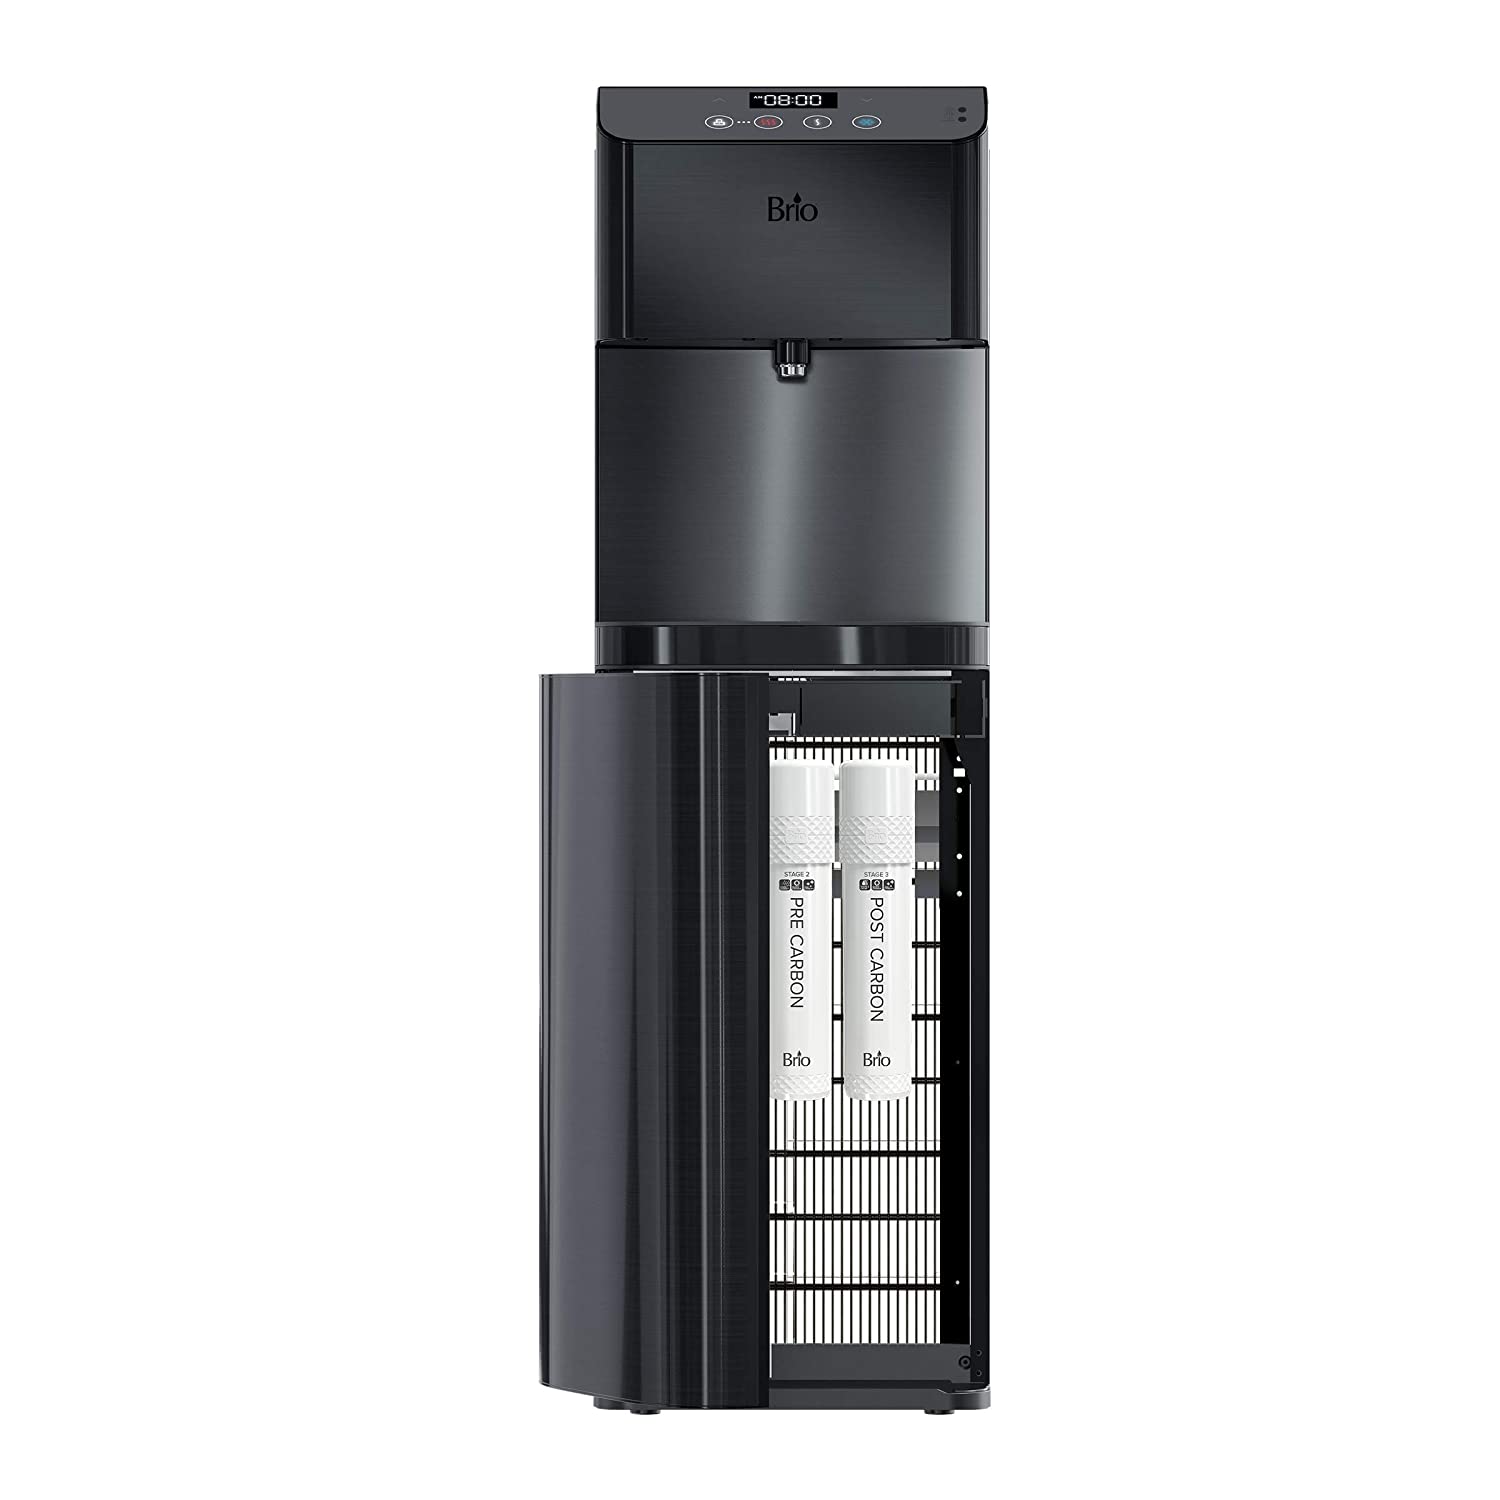 Brio Moderna Self-Cleaning Touchless Bottleless Water Cooler Dispenser, Black Stainless- $285